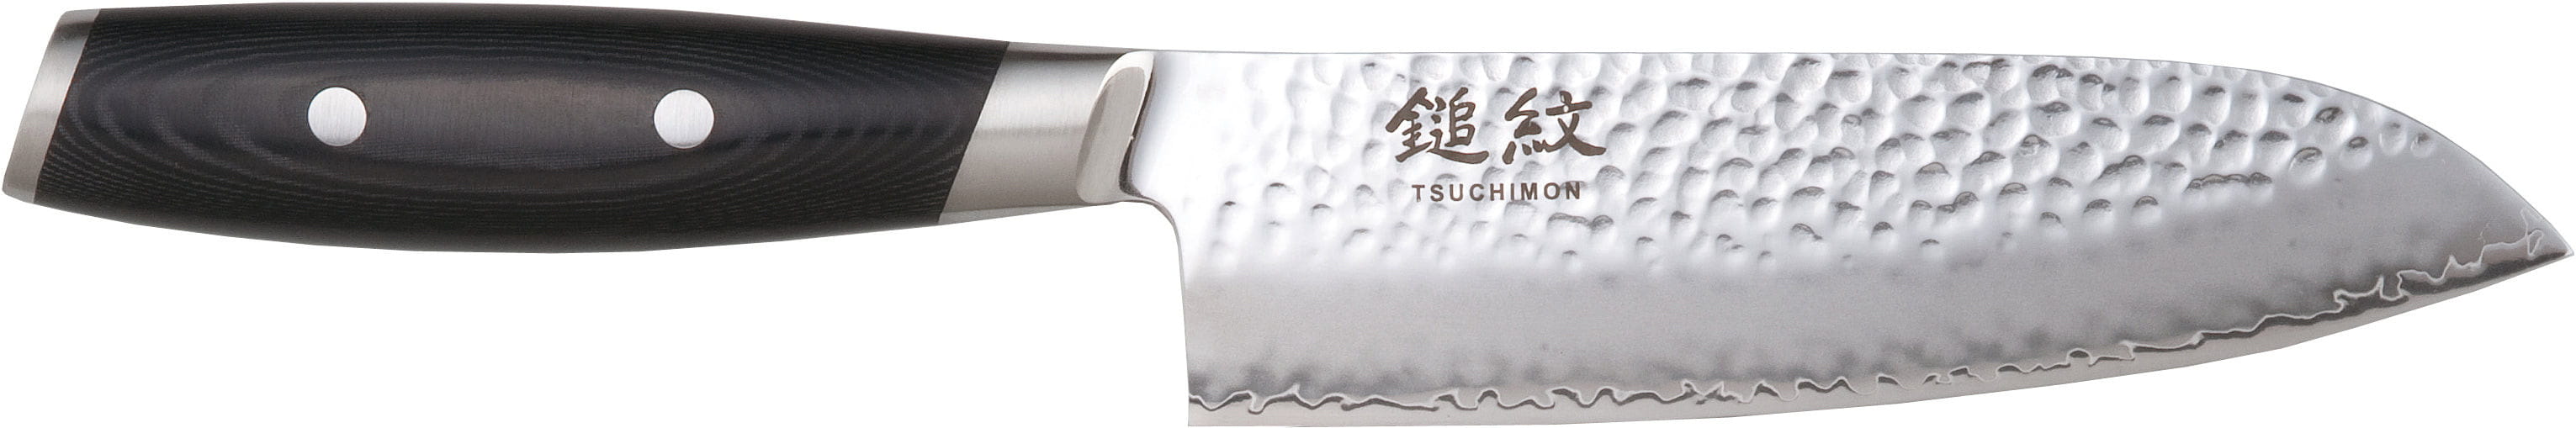 Couteau Yaxell Tsuuchimon Santoku, 16,5 cm